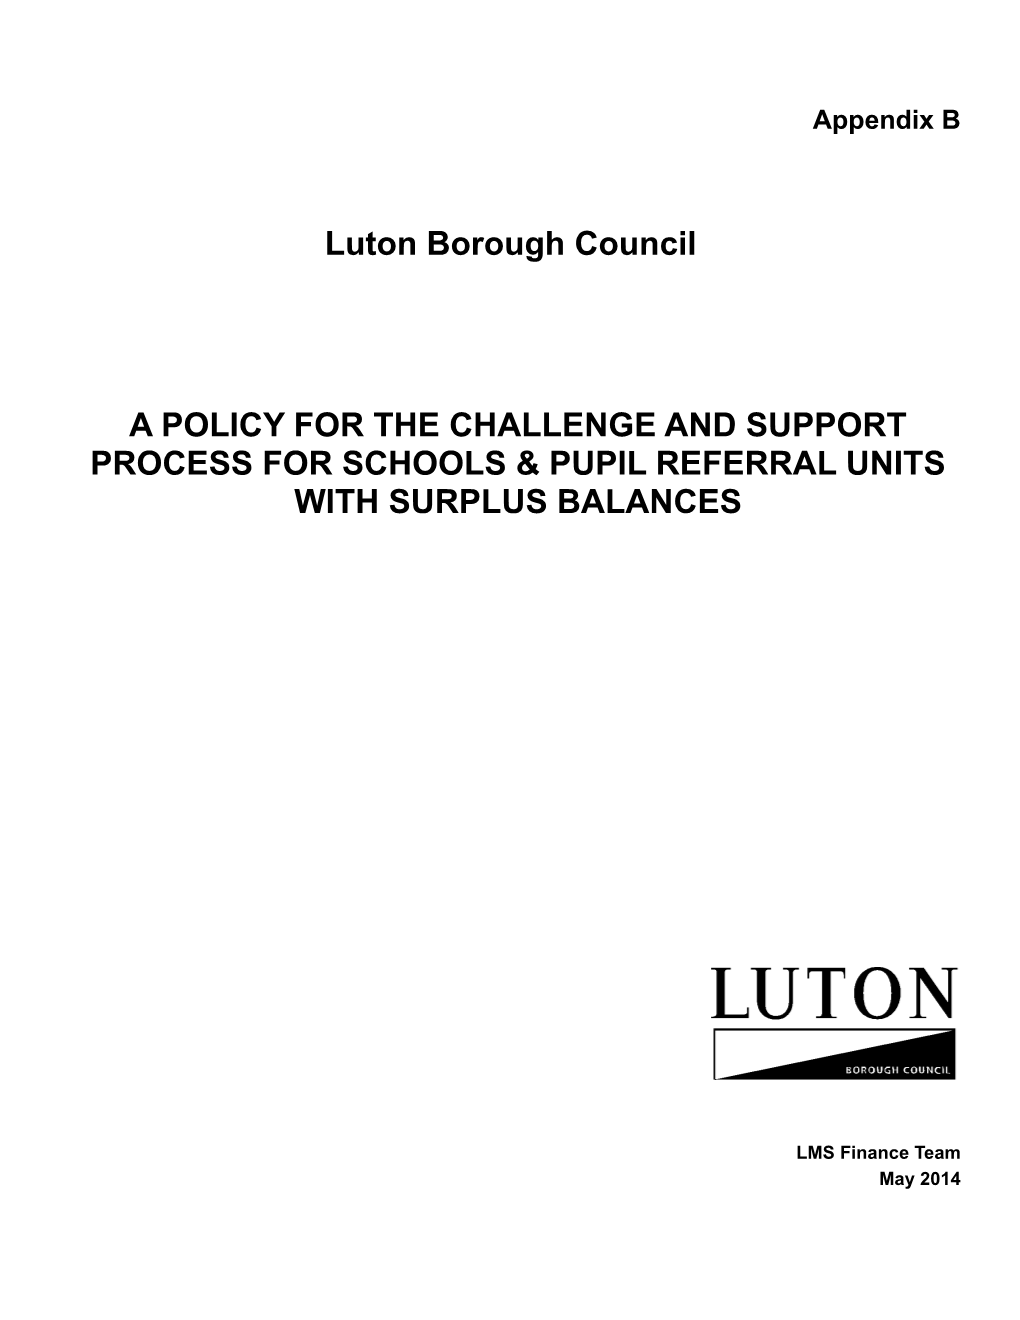 Surplus Balances Policy